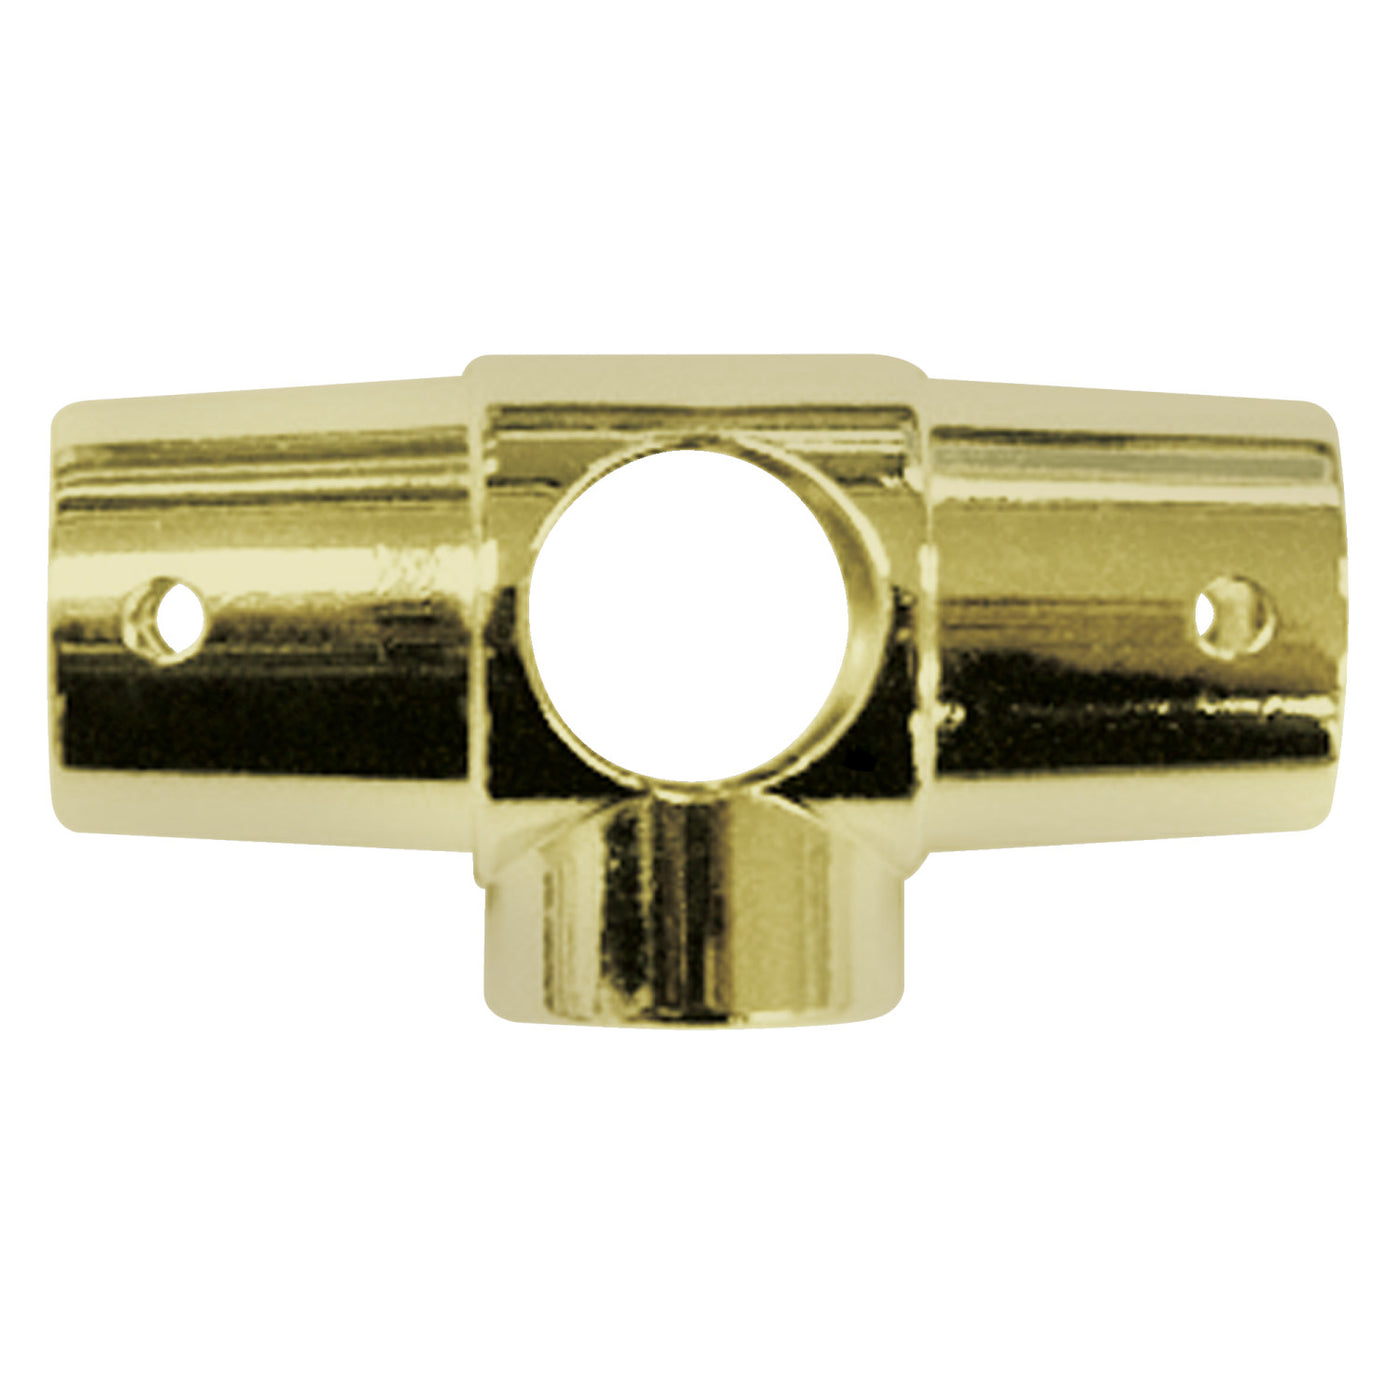 Elements of Design EDRCB2 Shower Ring Connector 5 Holes, Polished Brass